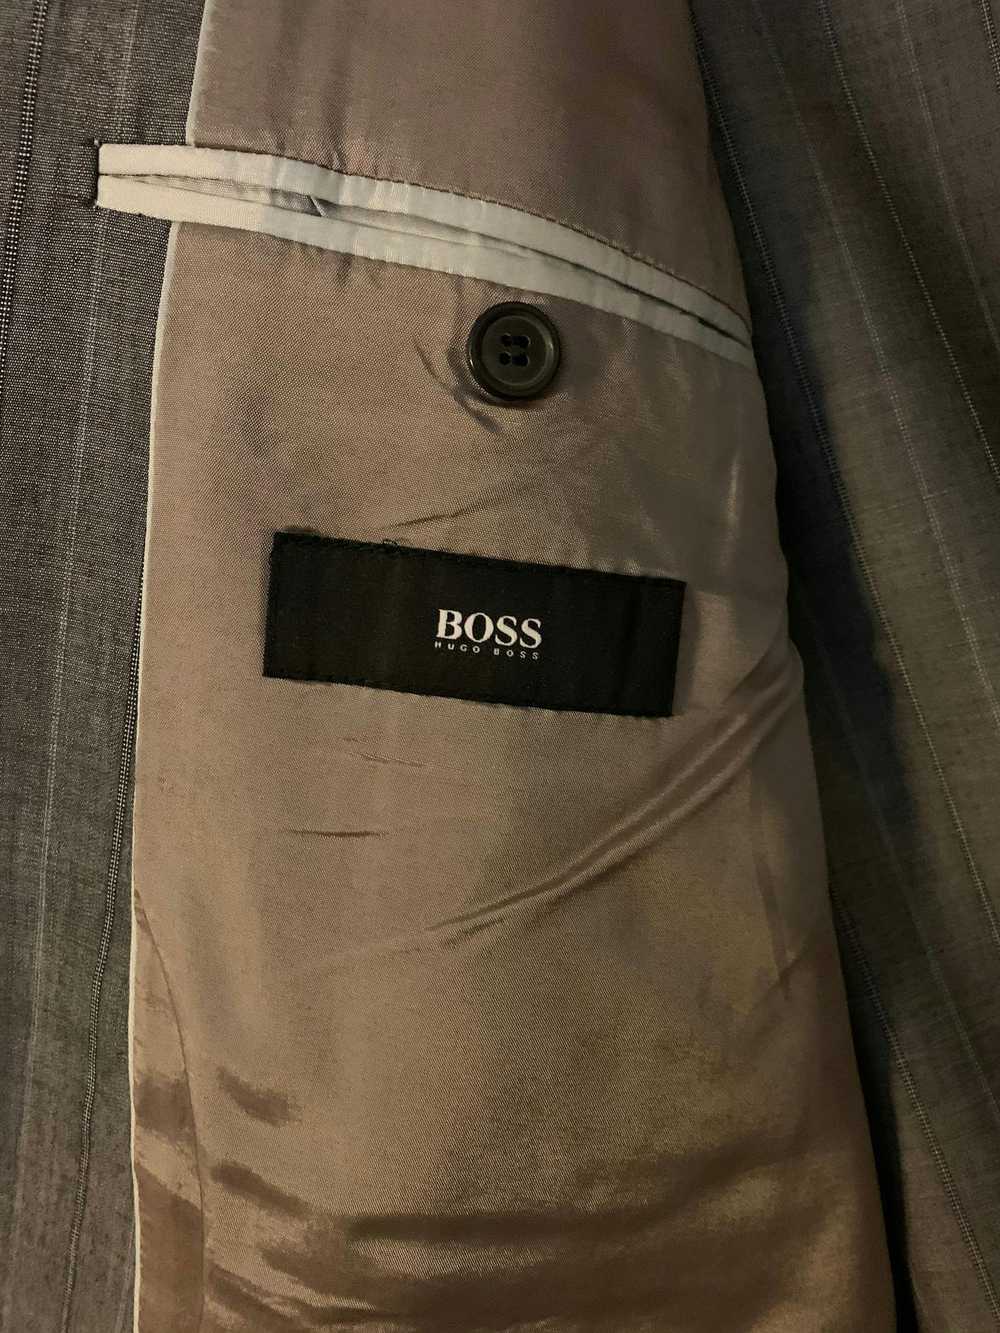 Hugo Boss Hugo Boss suit - image 3